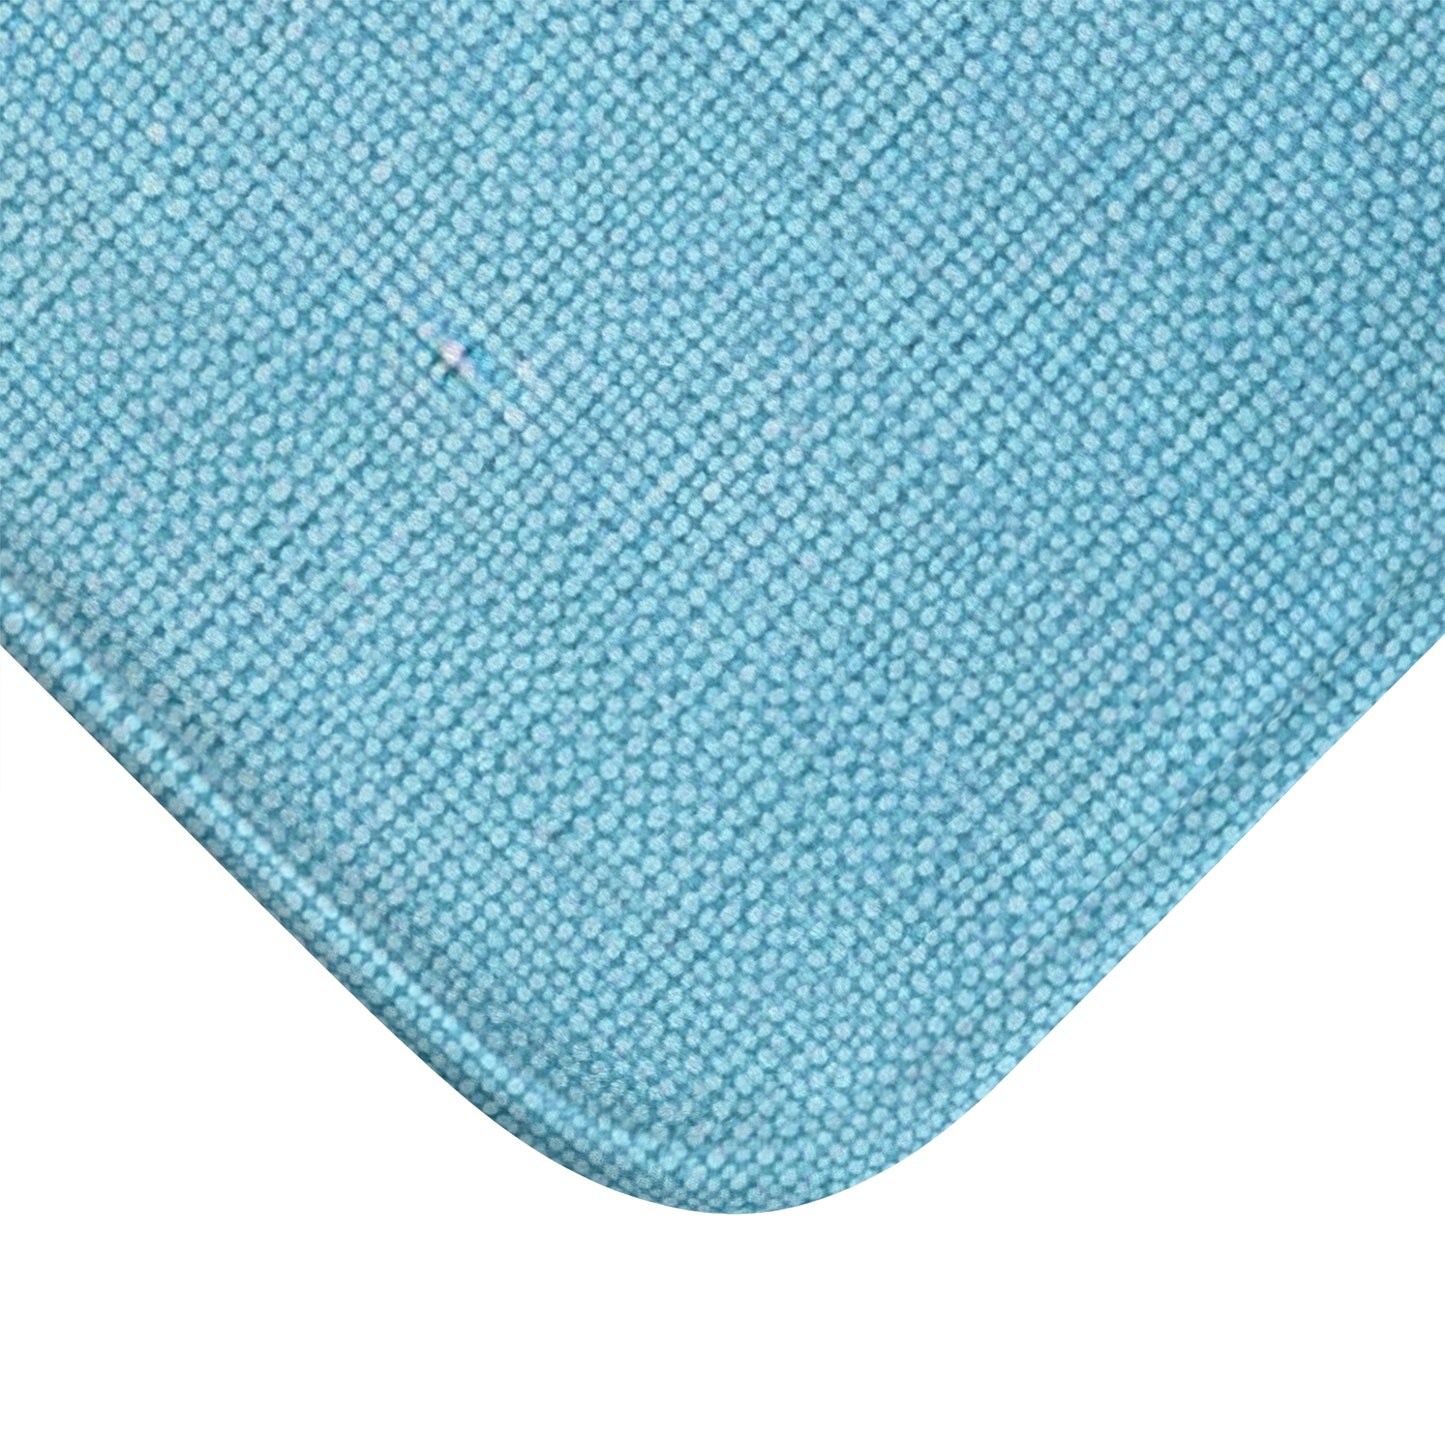 Bright Aqua Teal: Denim-Inspired Refreshing Blue Summer Fabric - Bath Mat